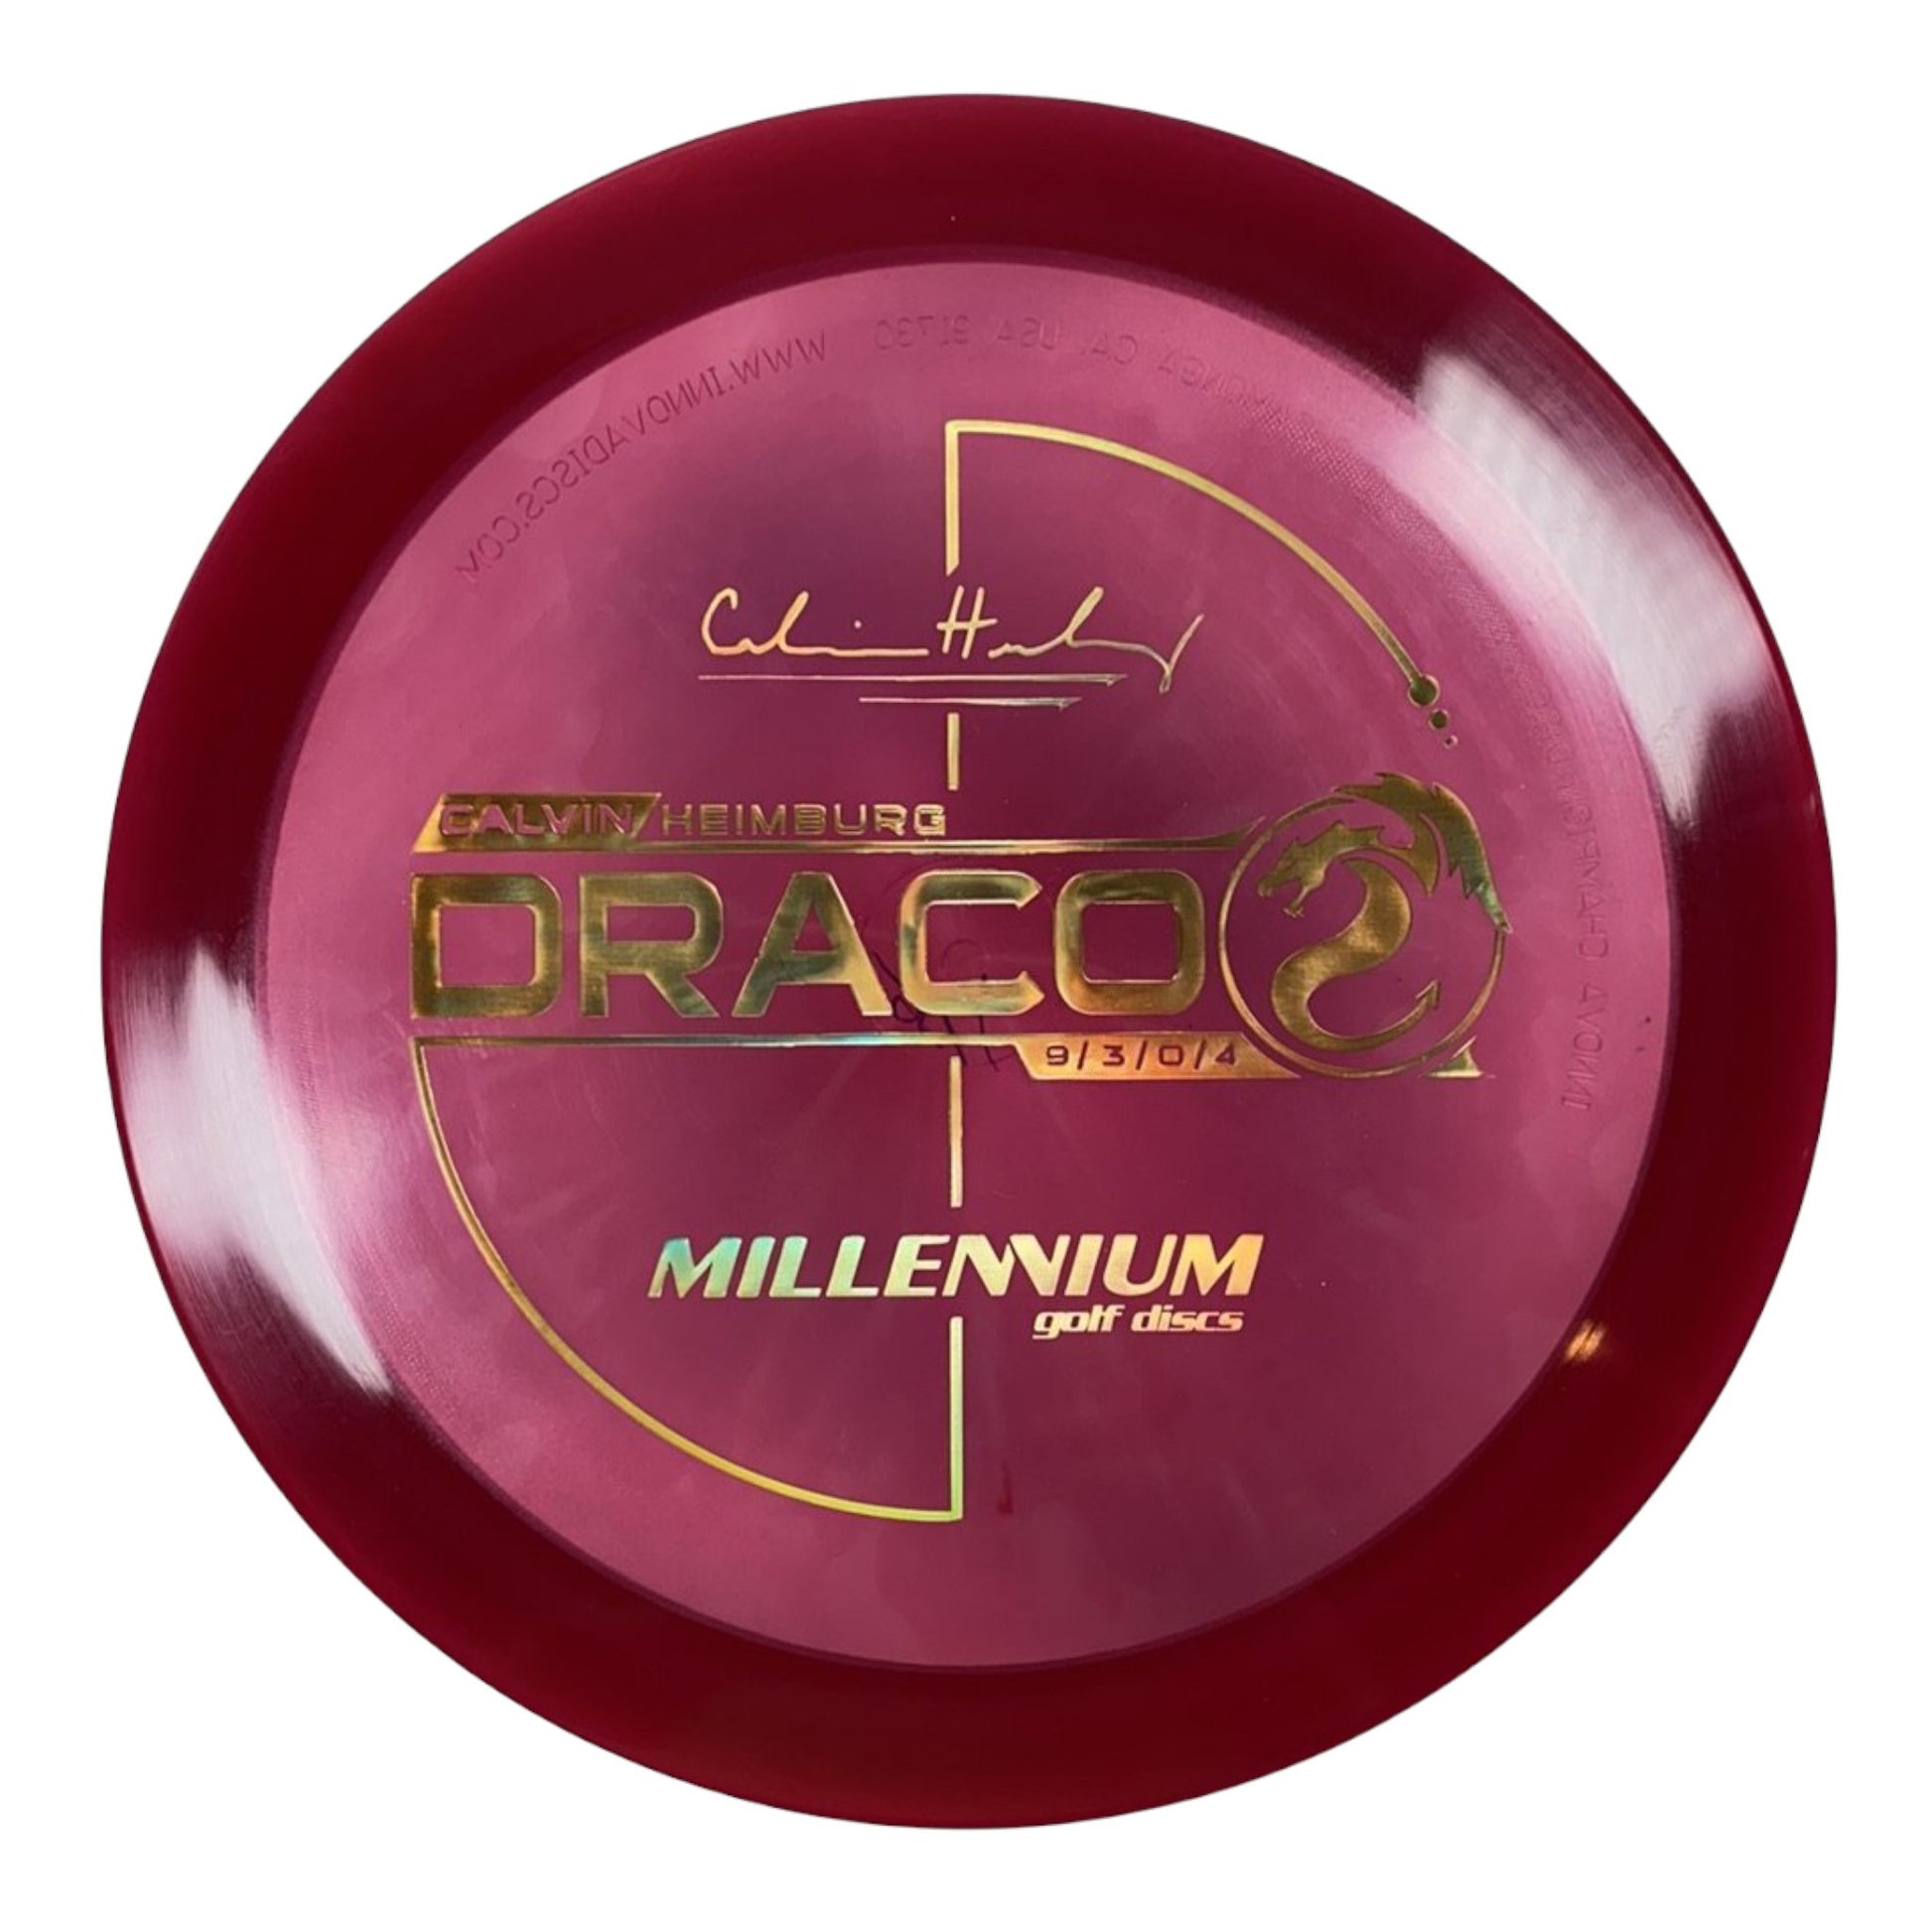 Millennium Golf Discs Draco | Quantum | Red/Gold 175g (Calvin Heimburg) Disc Golf